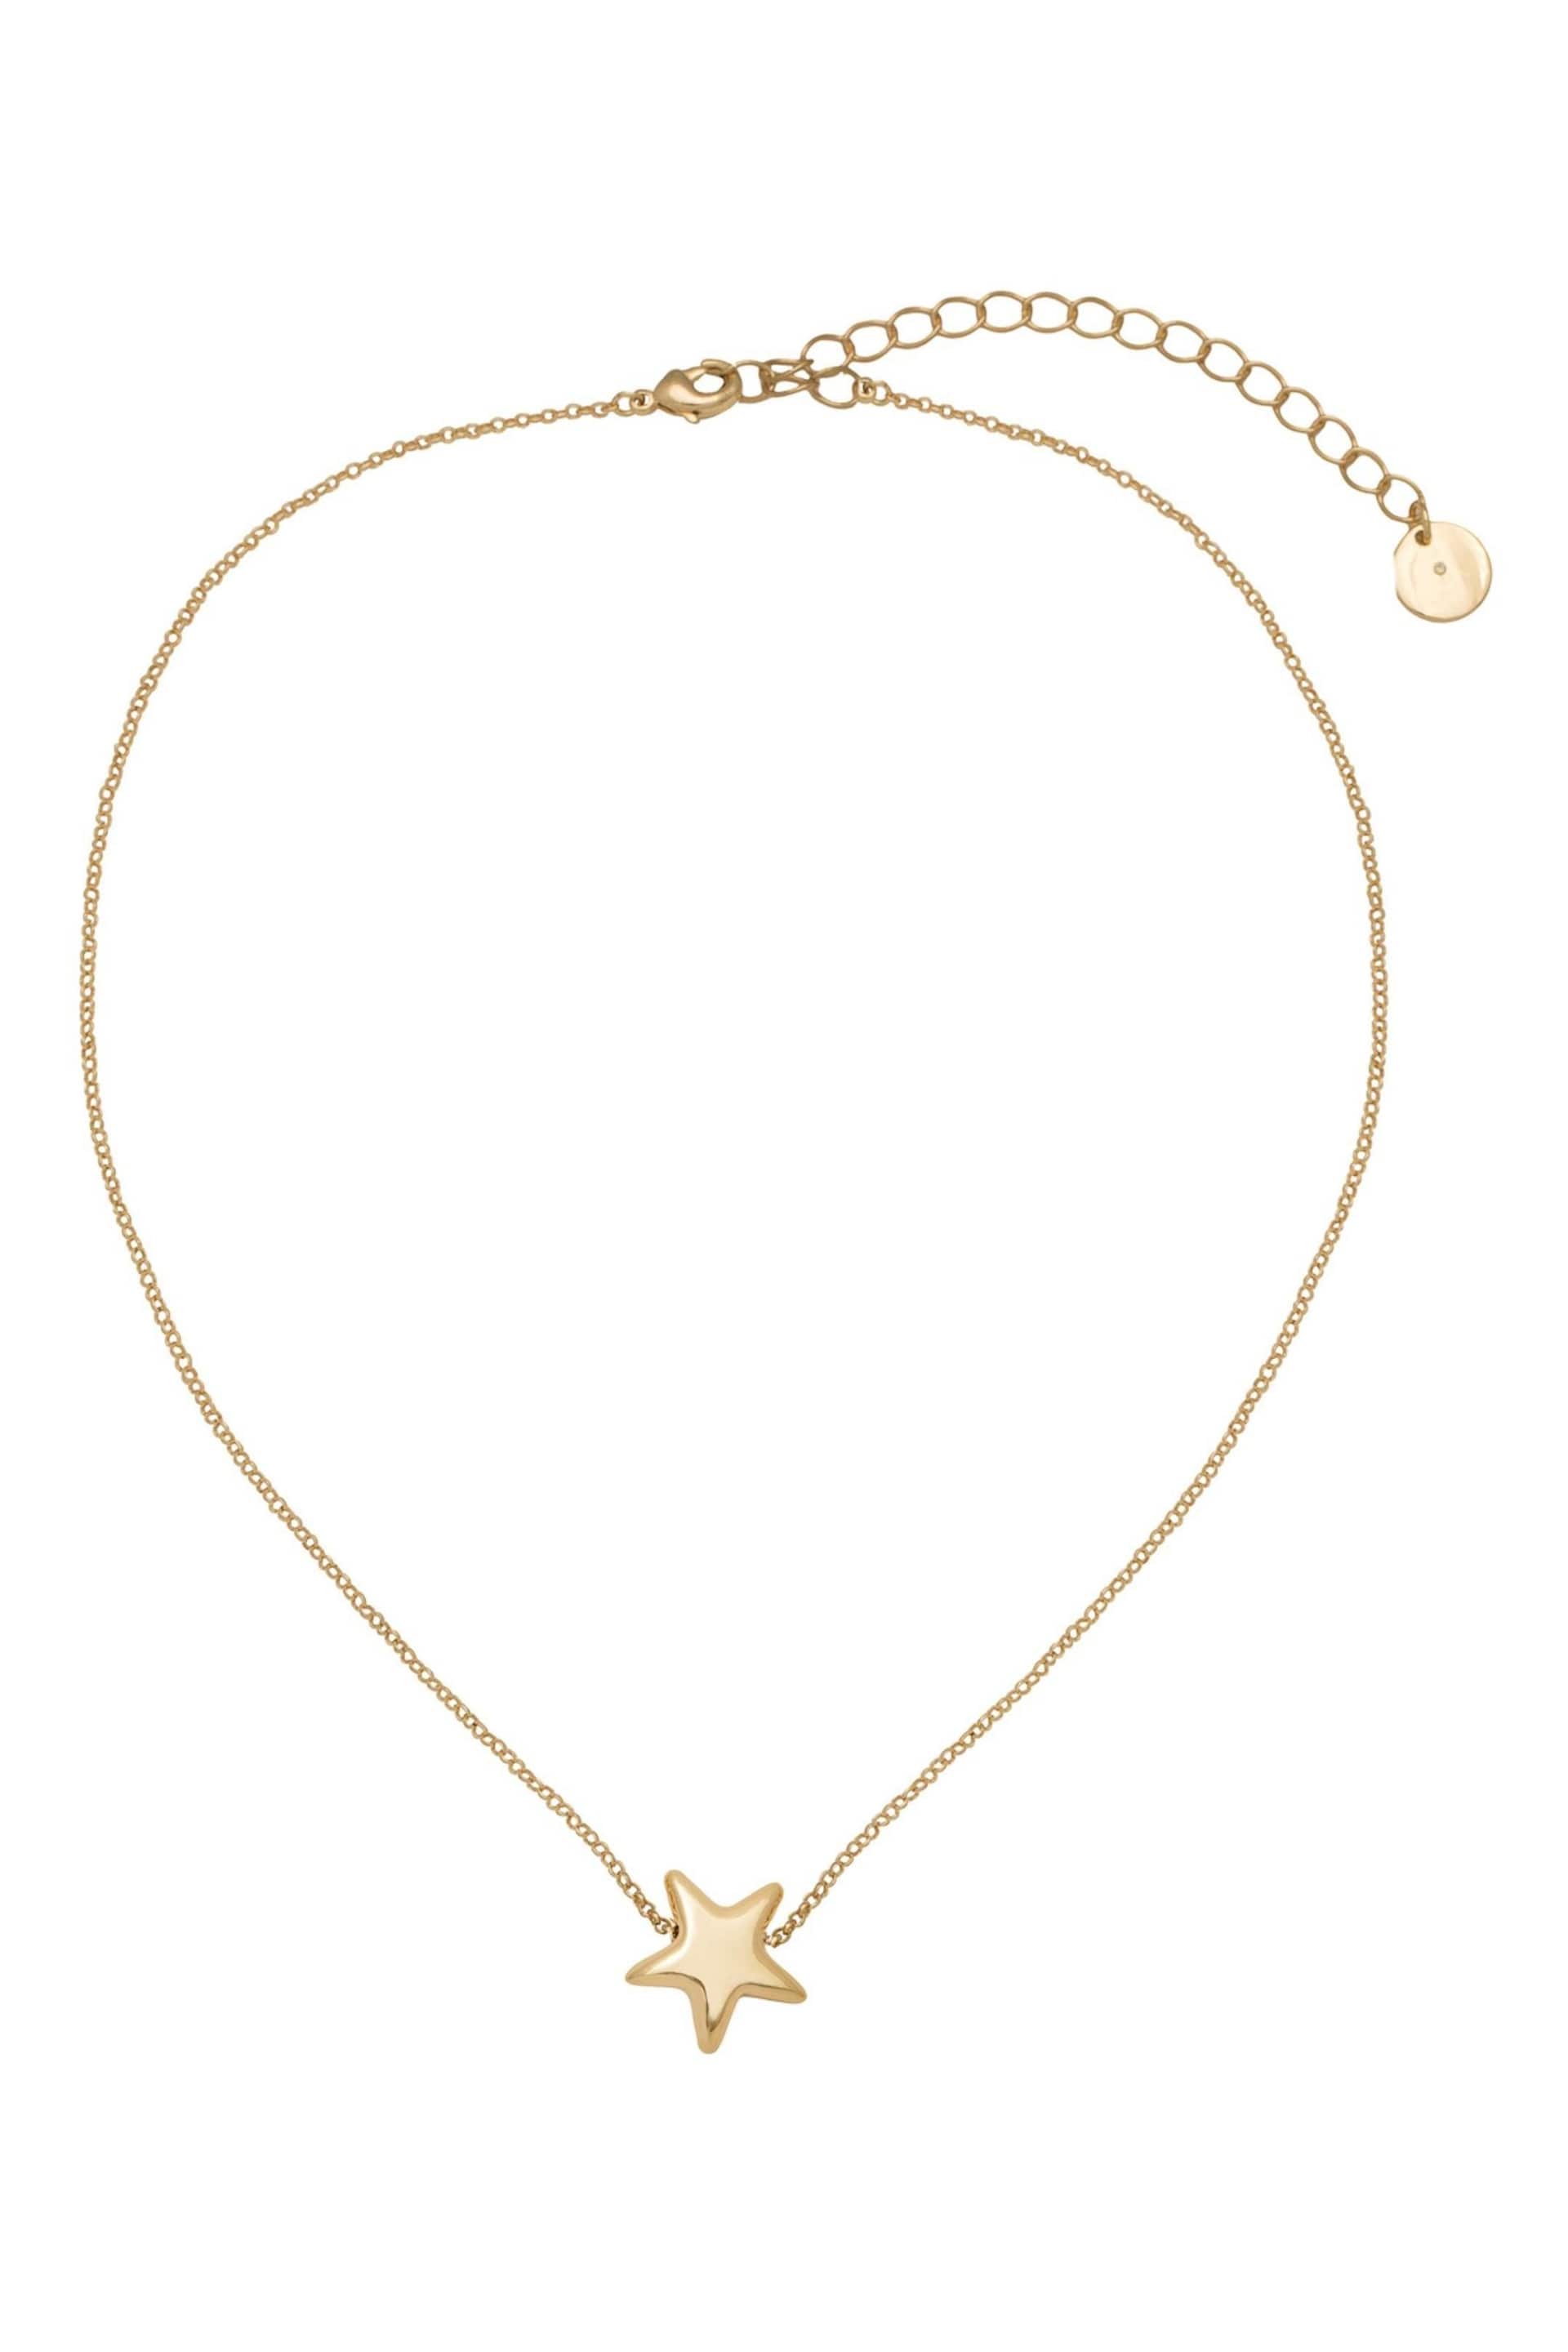 Caramel Jewellery London Gold Tone Star Choker Necklace - Image 2 of 5